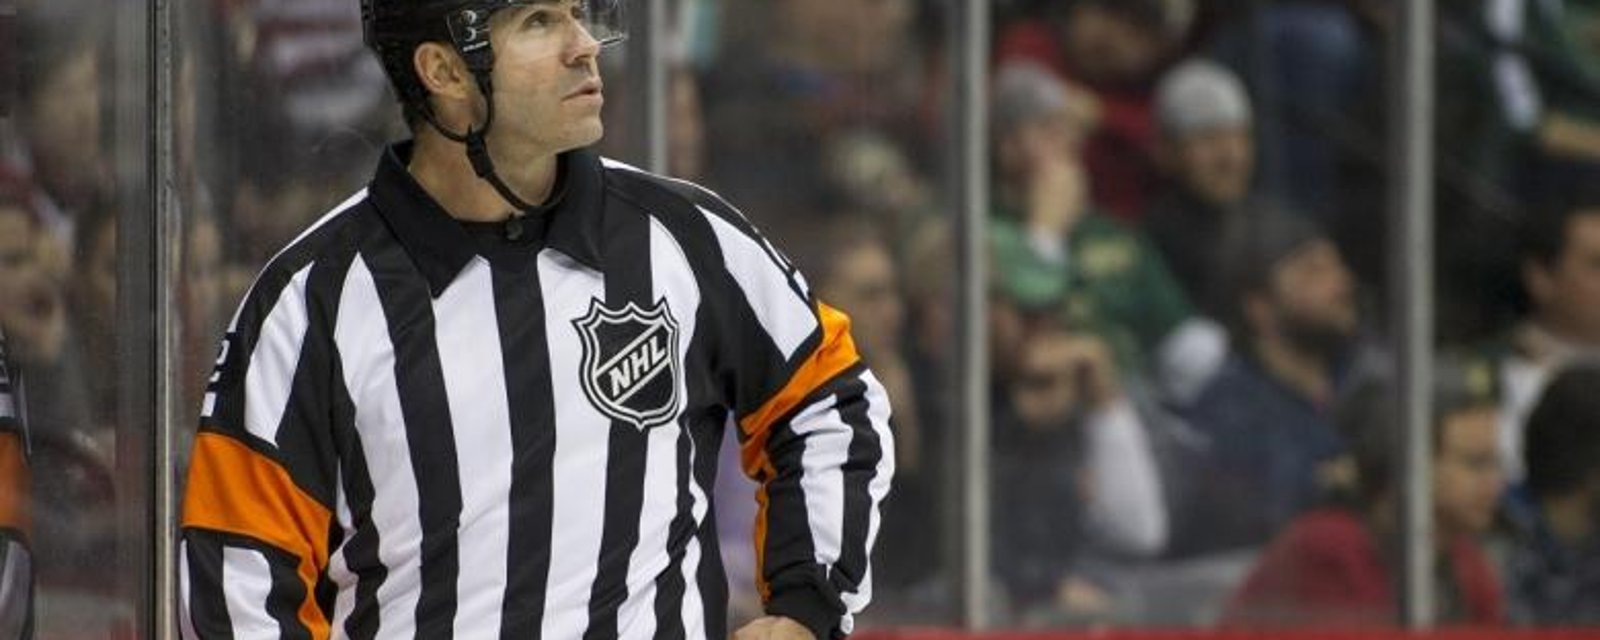 Report: Study reveals ethnic bias among NHL referees.